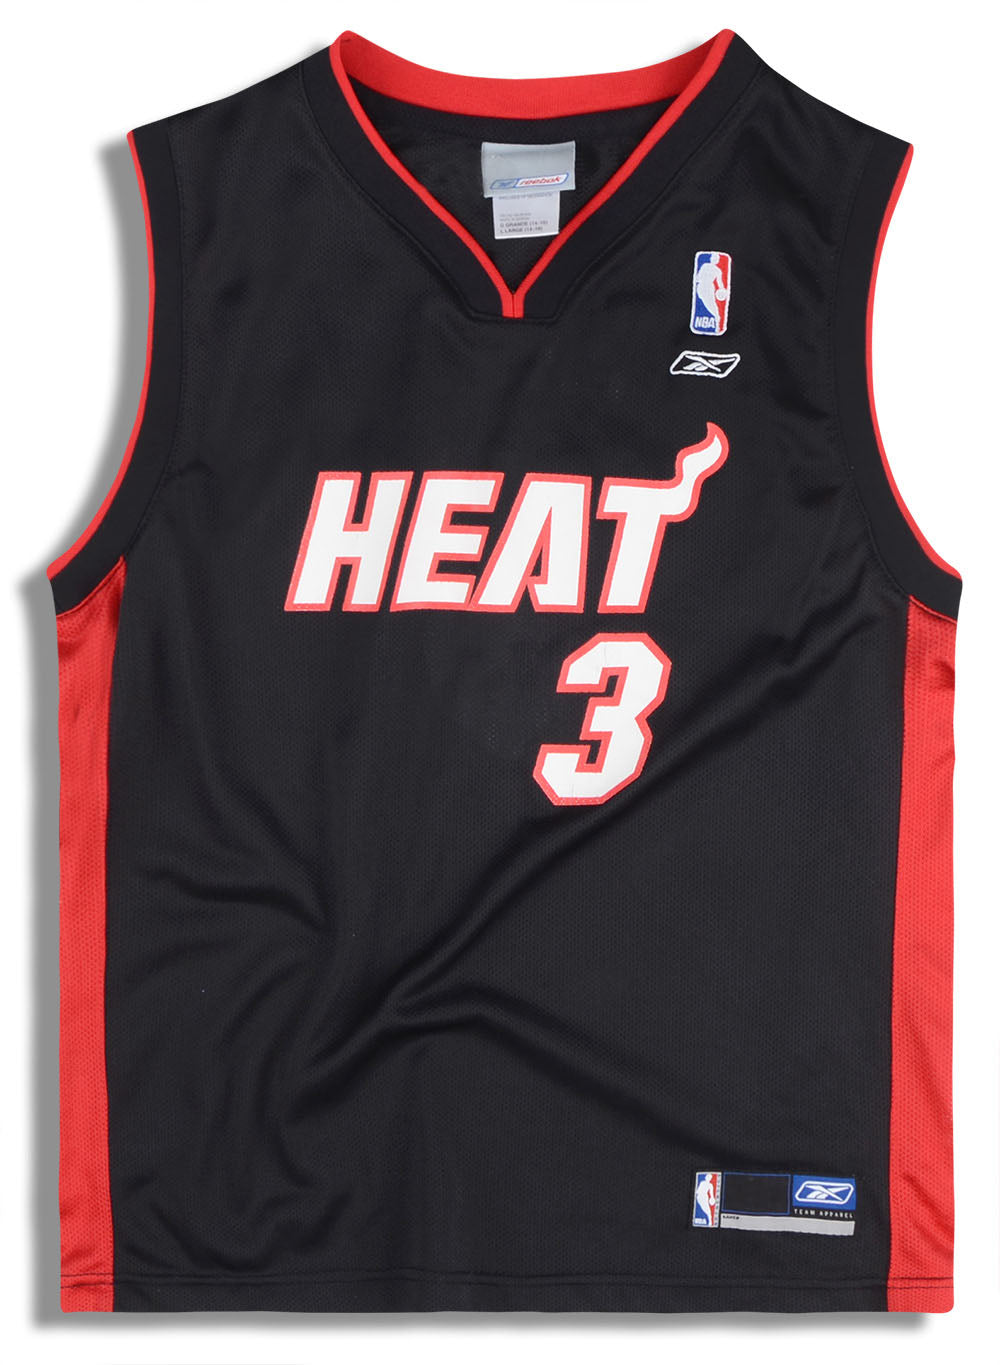 Vintage Miami Heat Dwayne Wade Reebok Stitched Jersey Size 2X